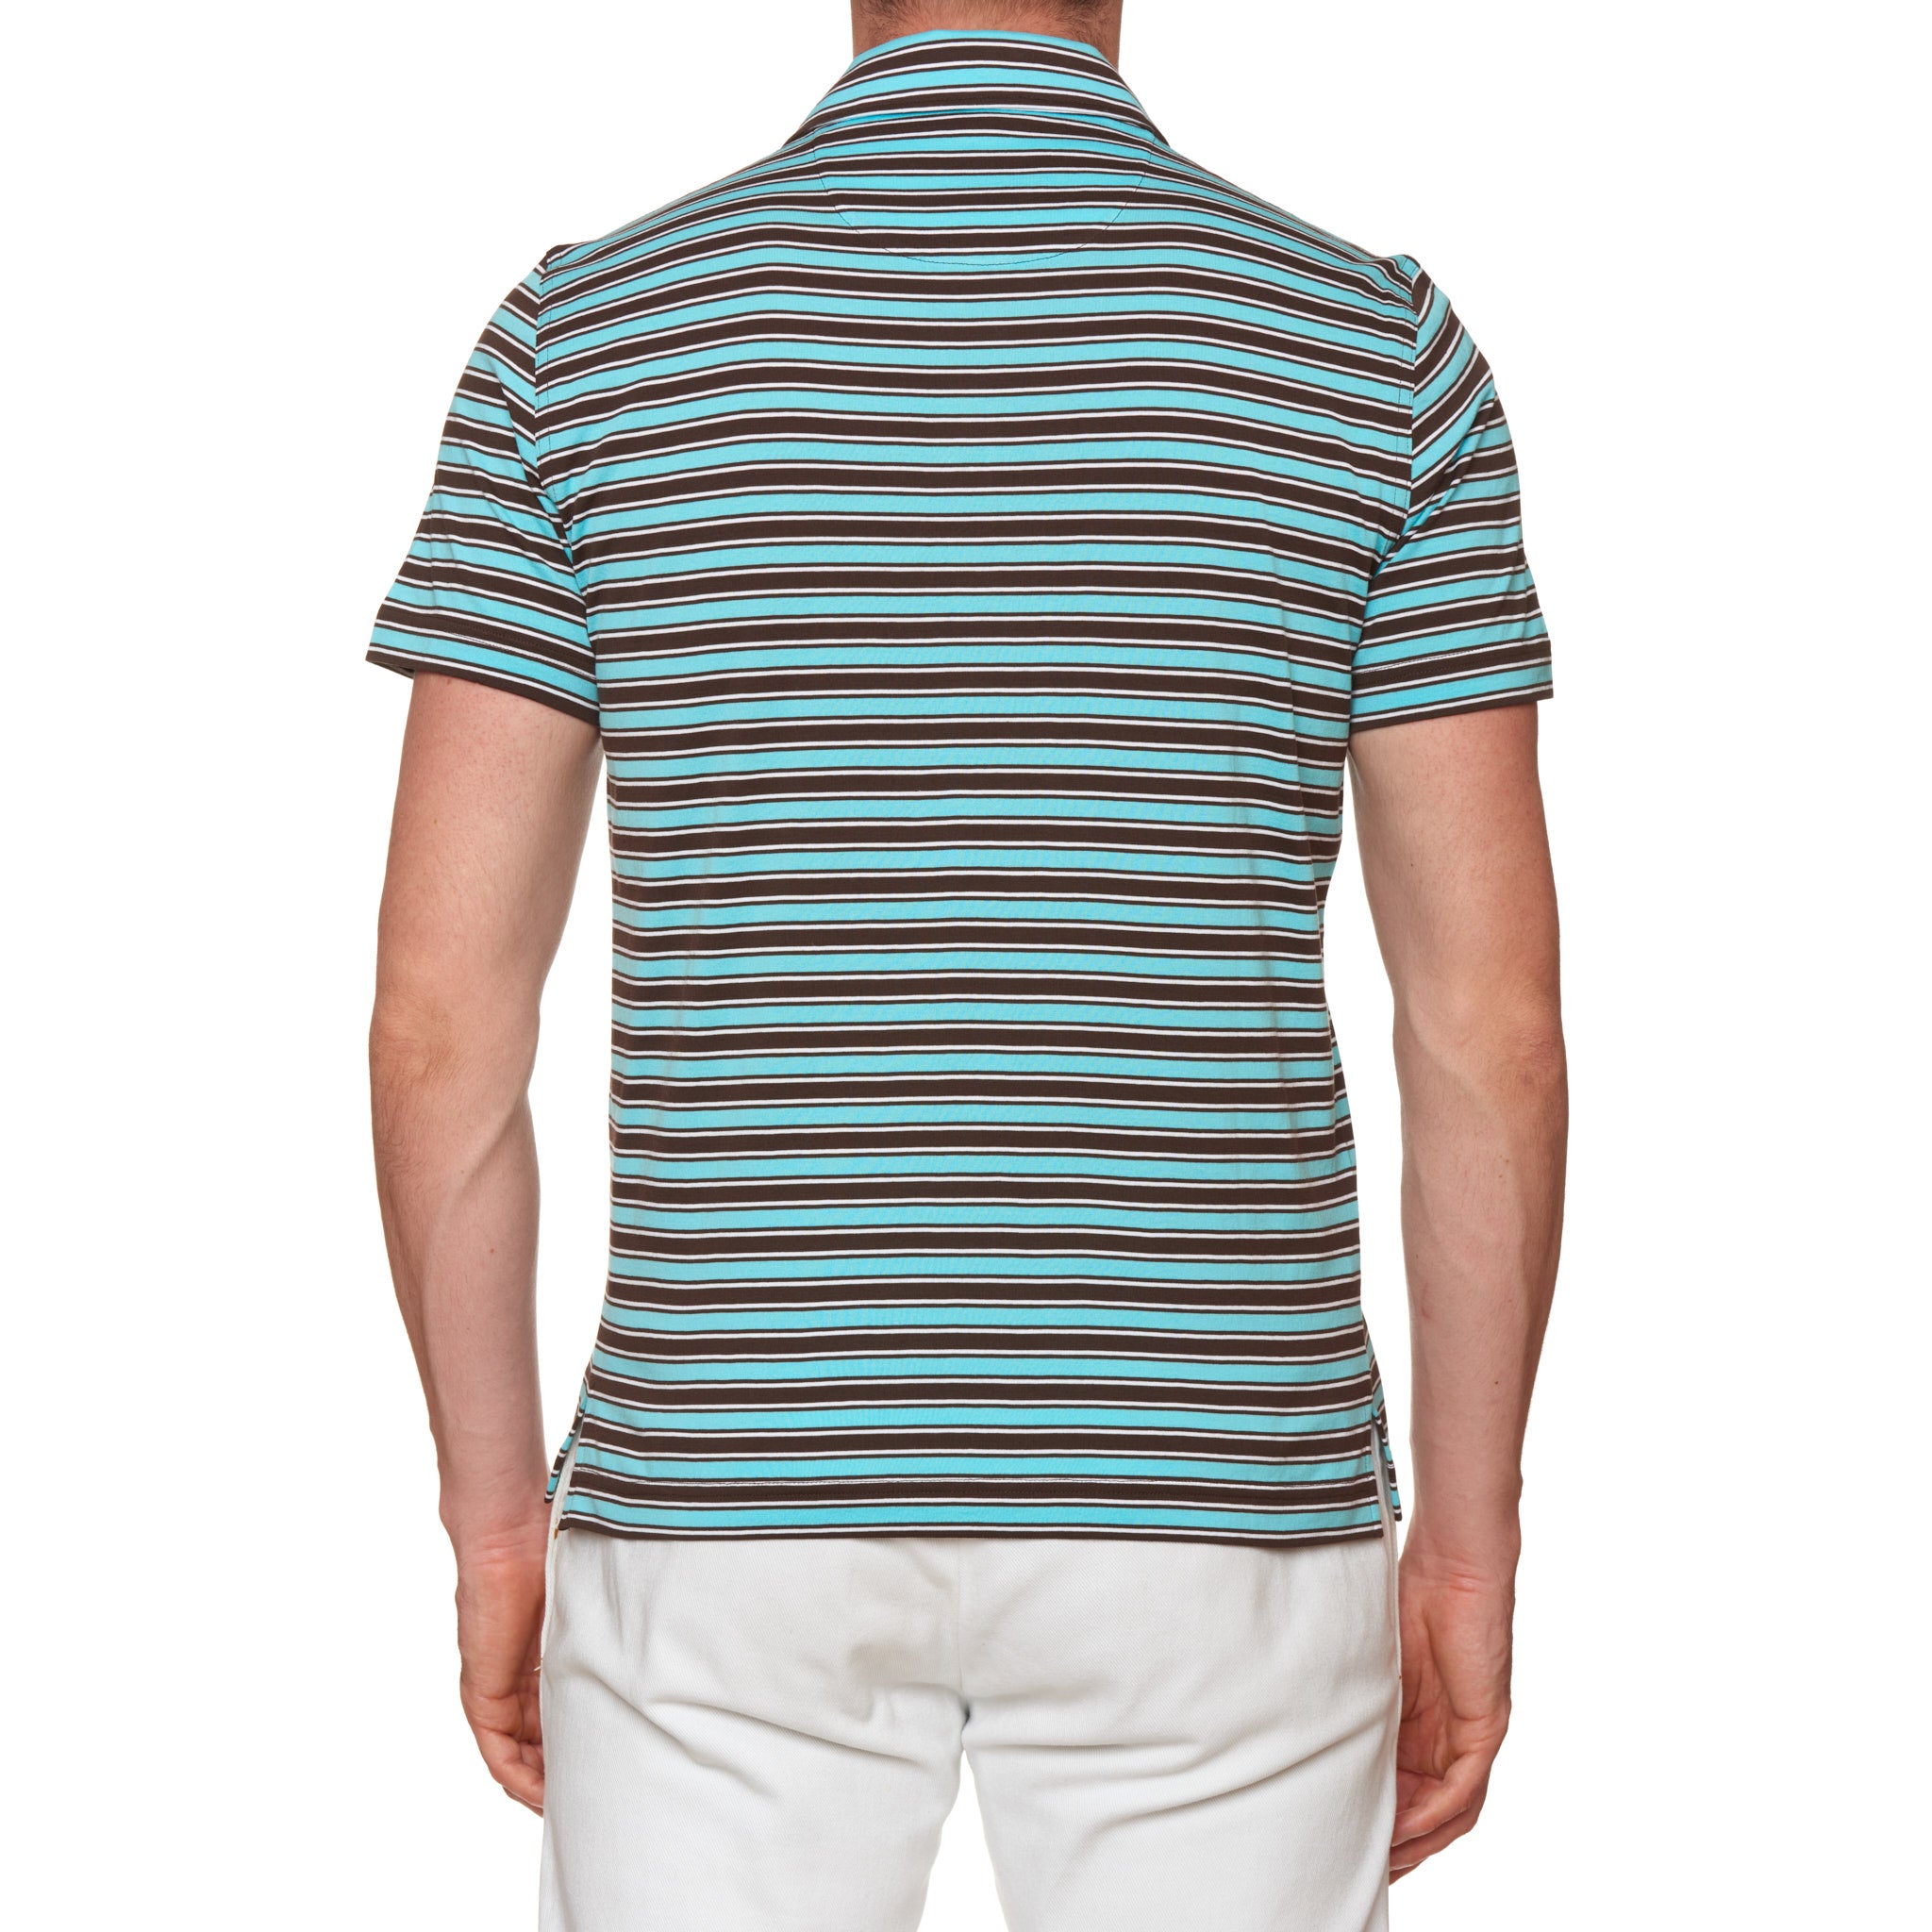 FEDELI "Florida" Multi-Color Striped Cotton Jersey Polo Shirt NEW